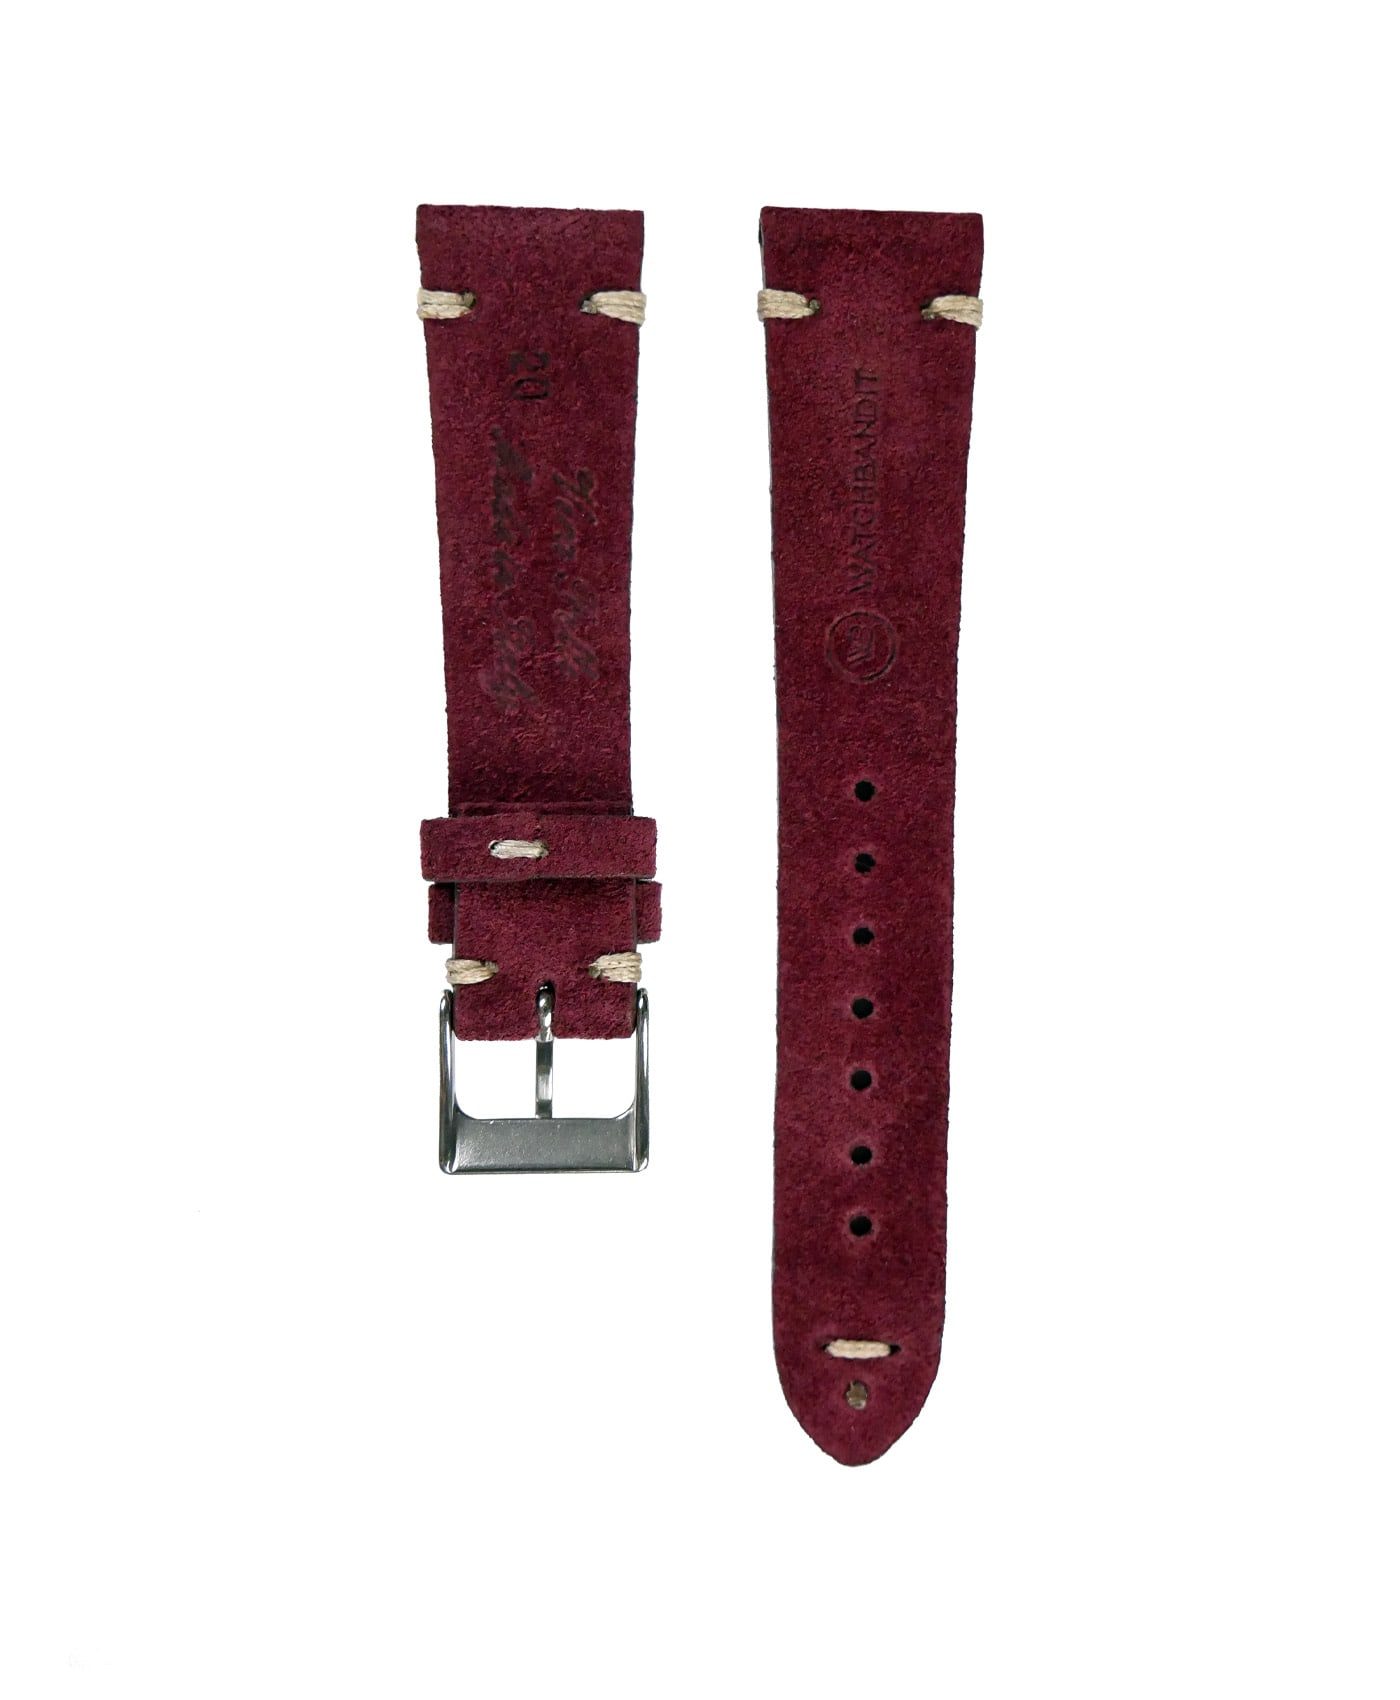 WB original premium suede watch strap burgundy bordeaux red rear